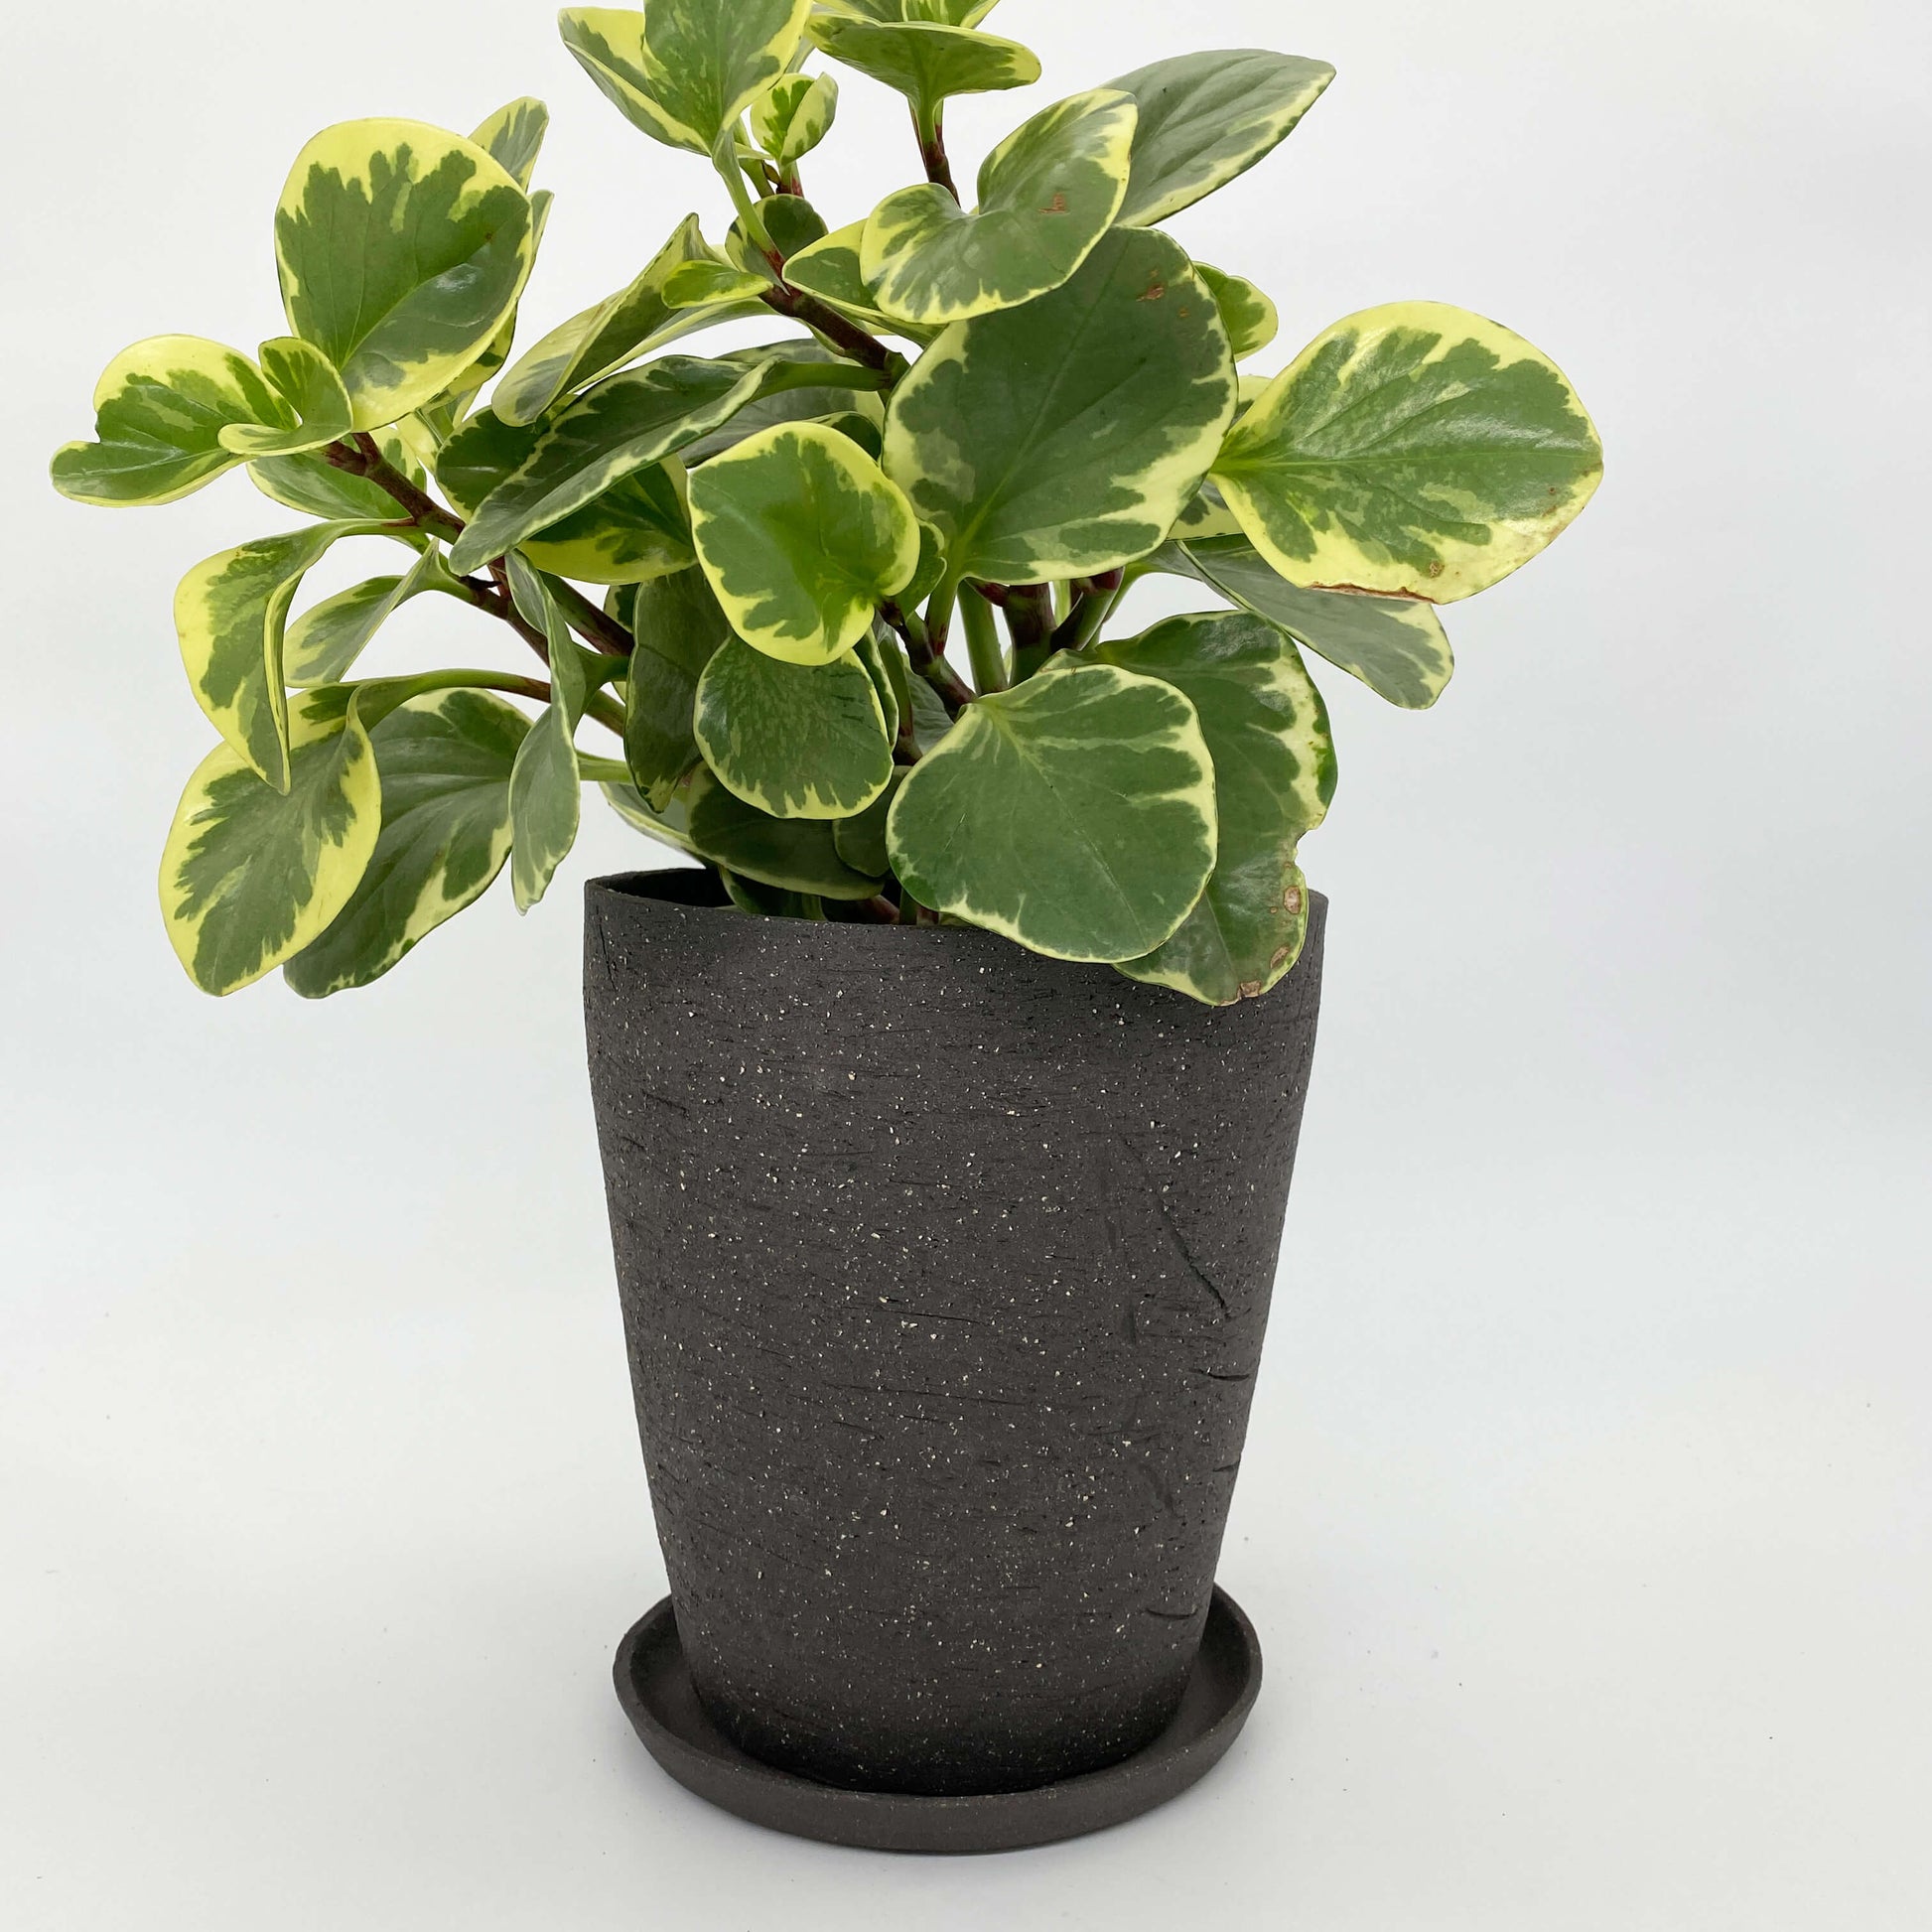 Black ceramic planter with stone texture